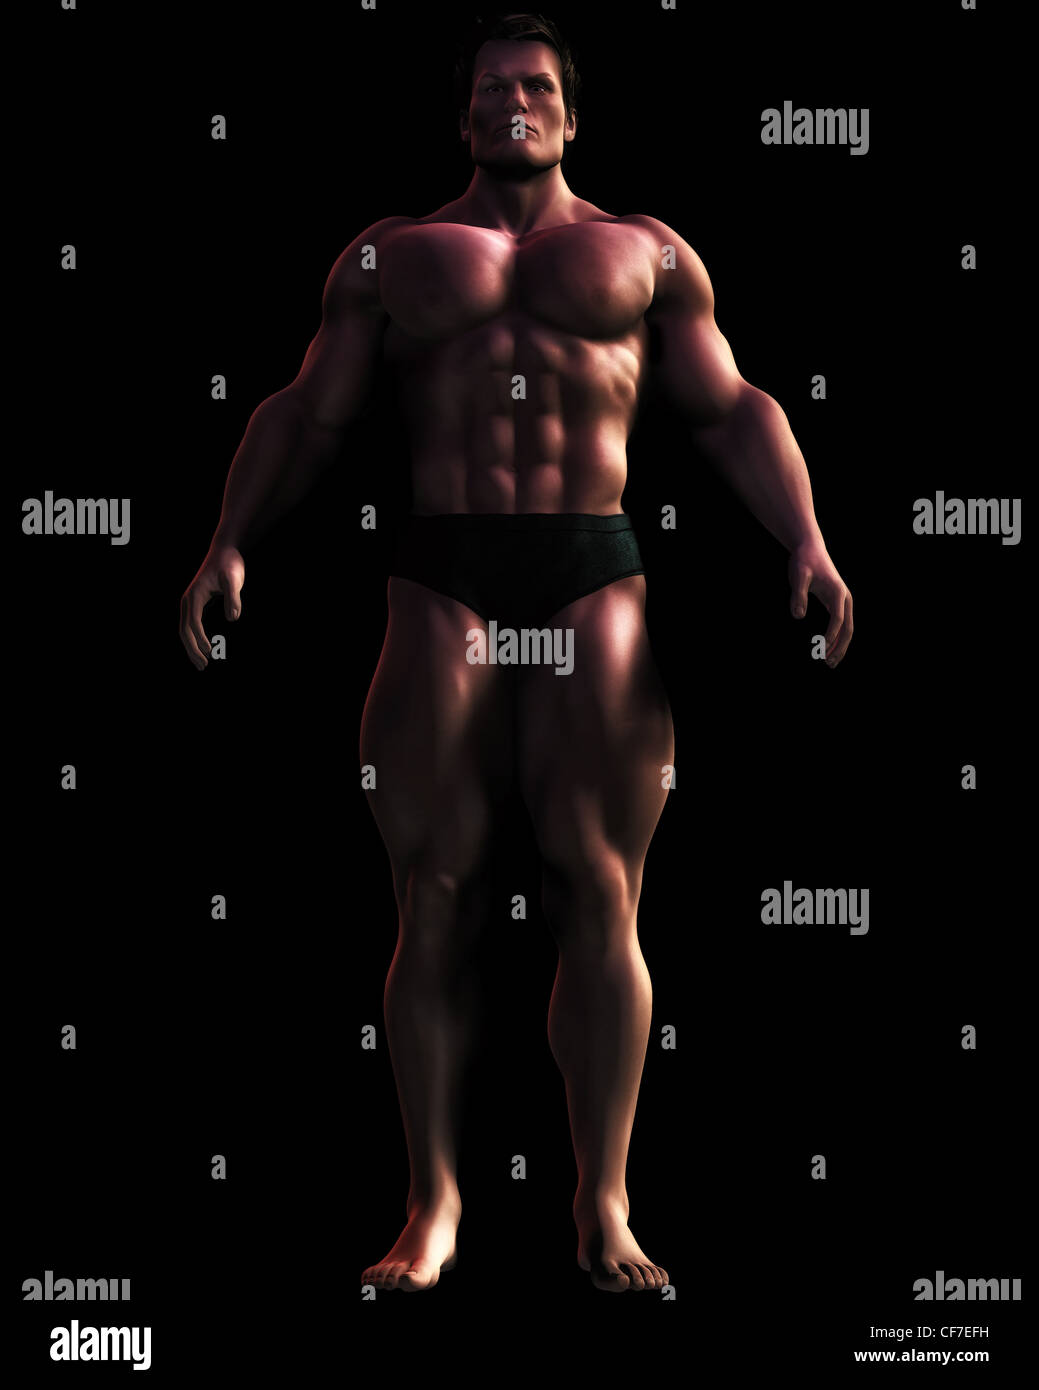 Digital illustration of an imposing, large male bodybuilder figure. Stock Photo